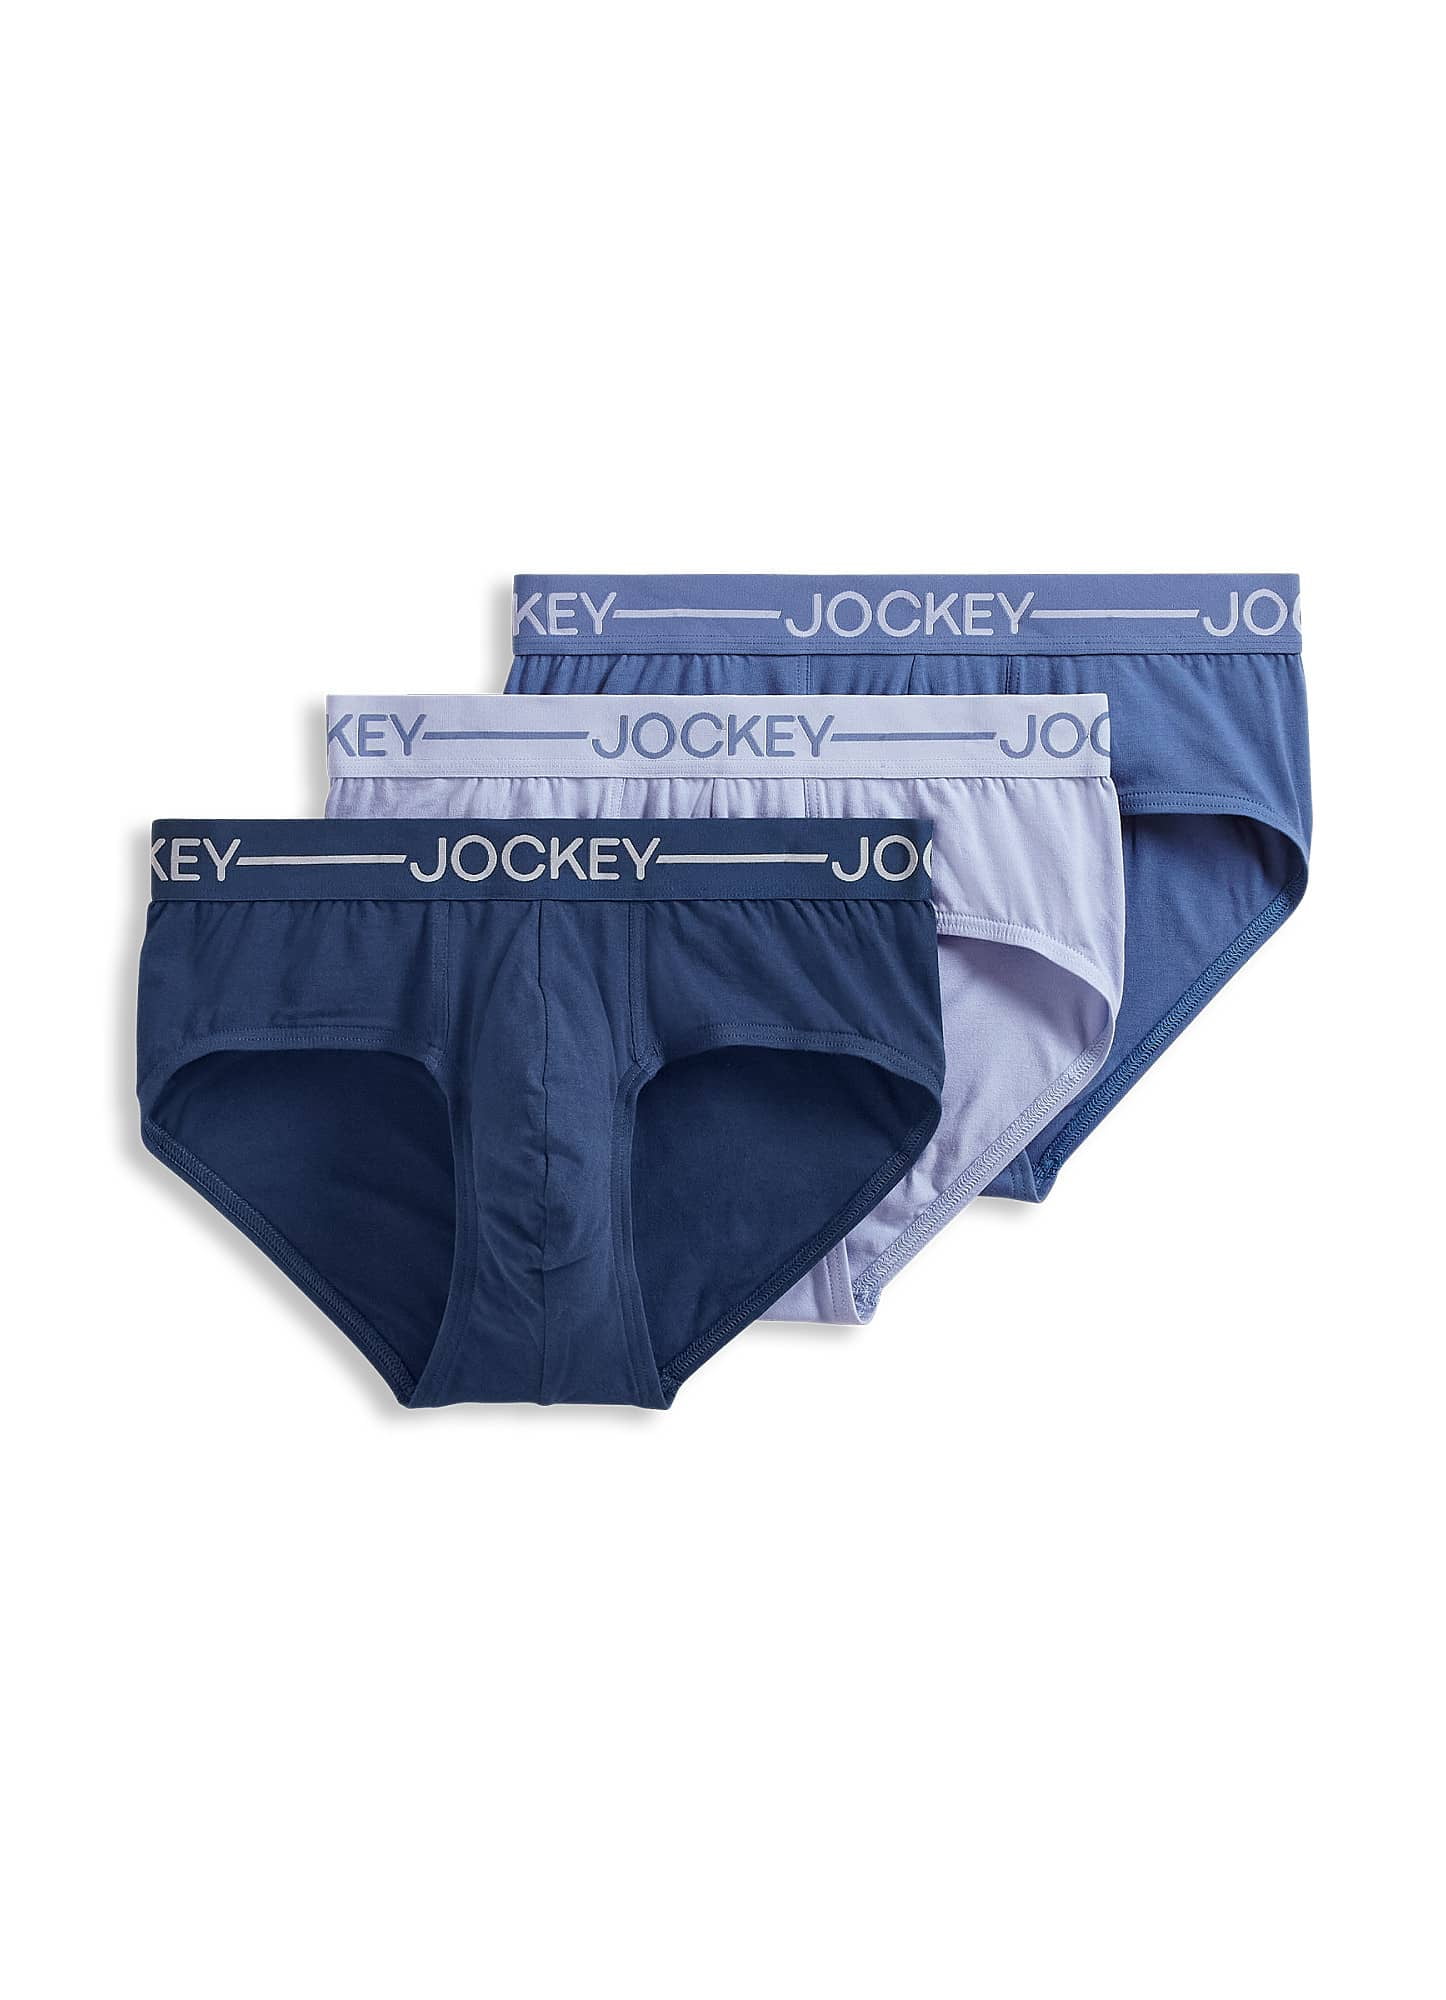 Jockey Men's Organic Cotton Stretch Brief - 3 Pack - Walmart.com